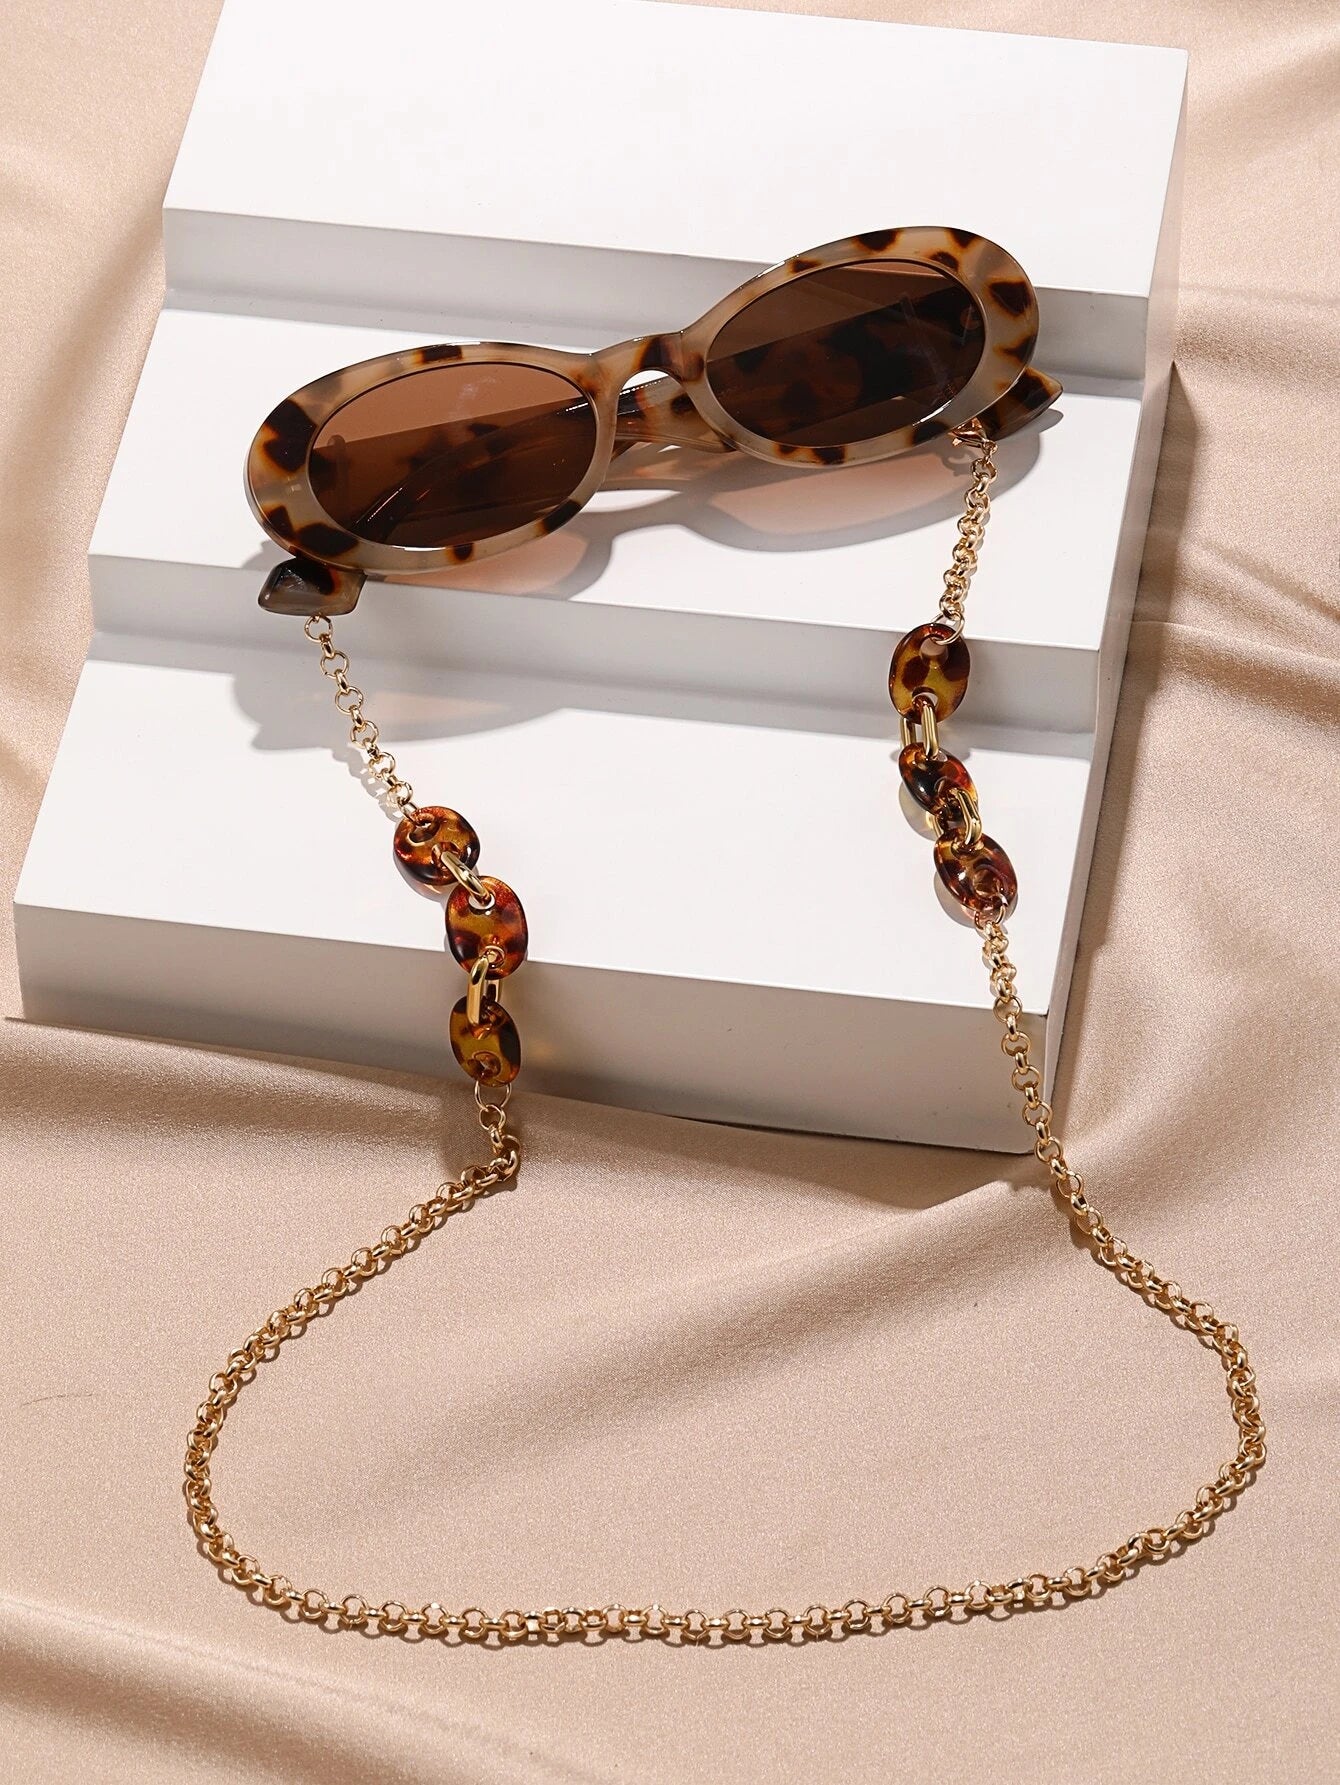 Tinted Lens Oval Frame Sunglasses & Sunglasses Chain